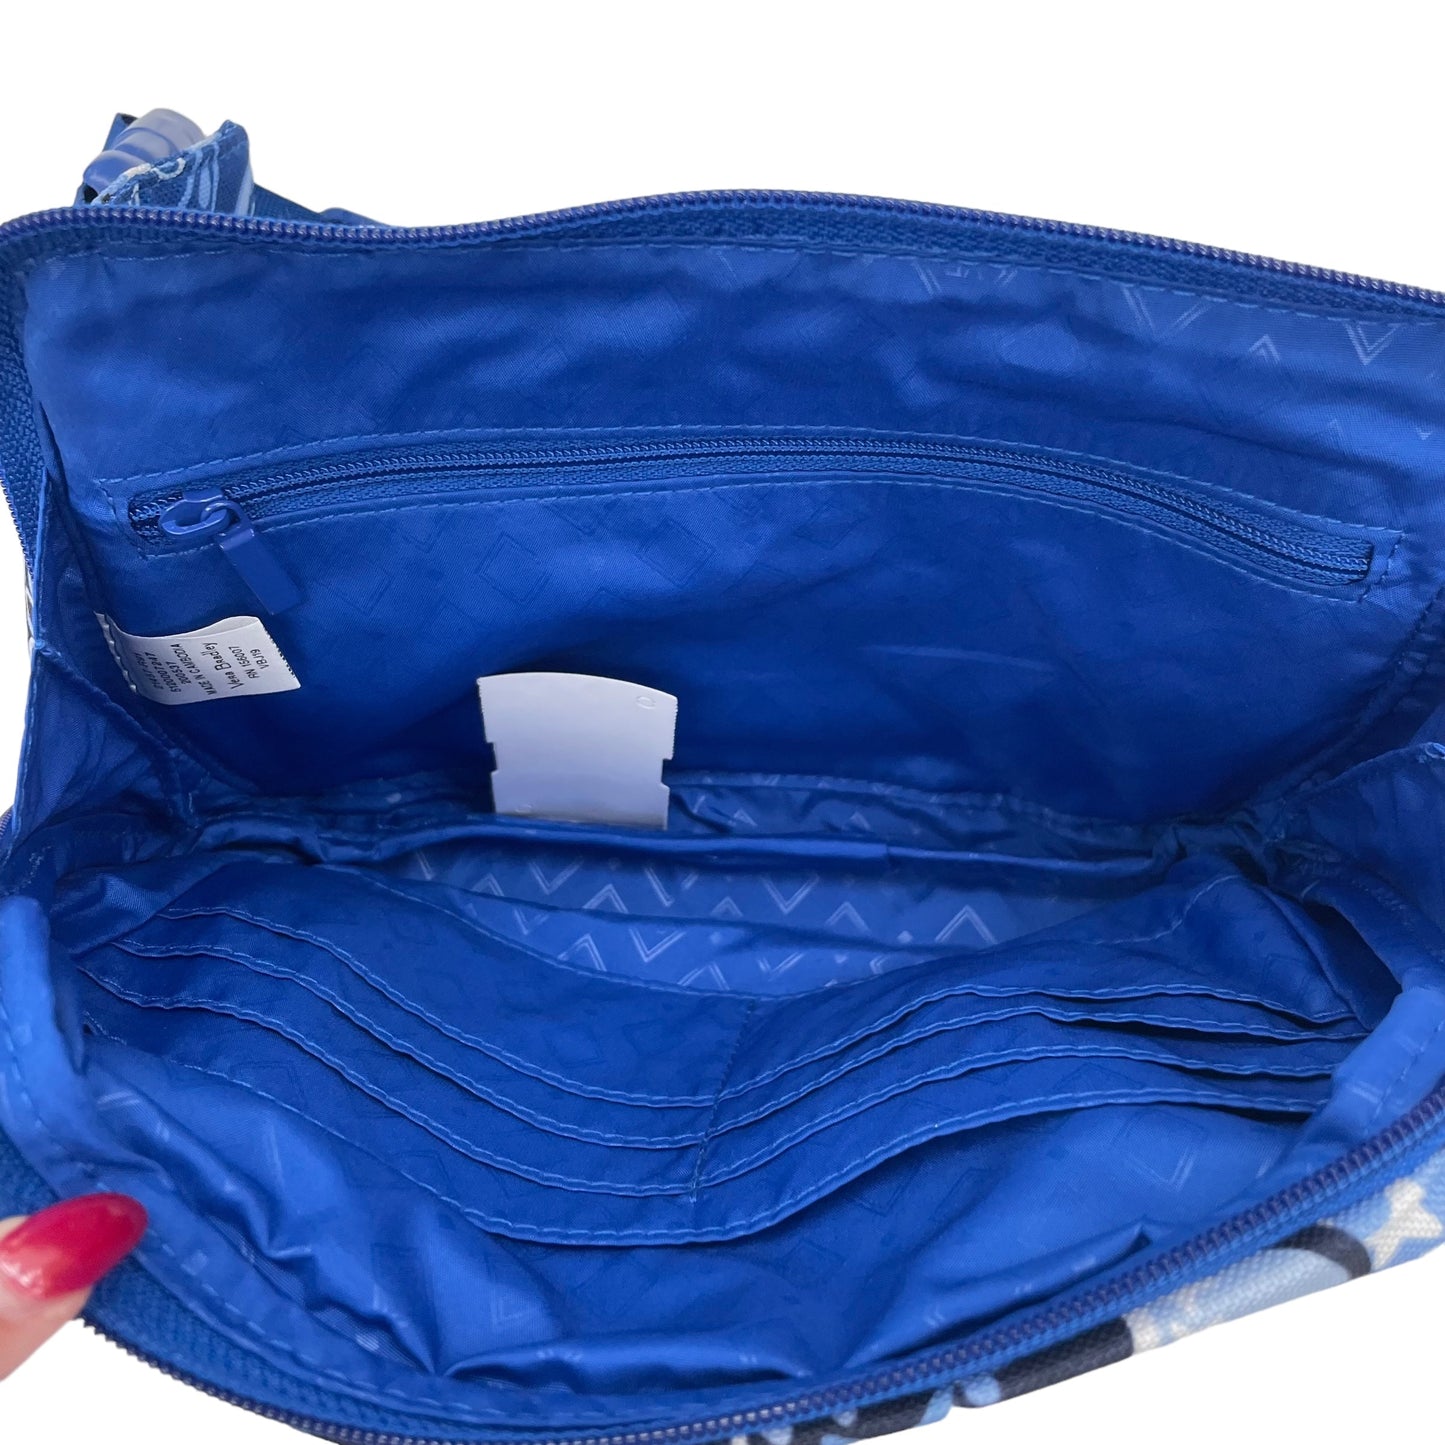 BLUE BELT BAG by VERA BRADLEY Size:MEDIUM